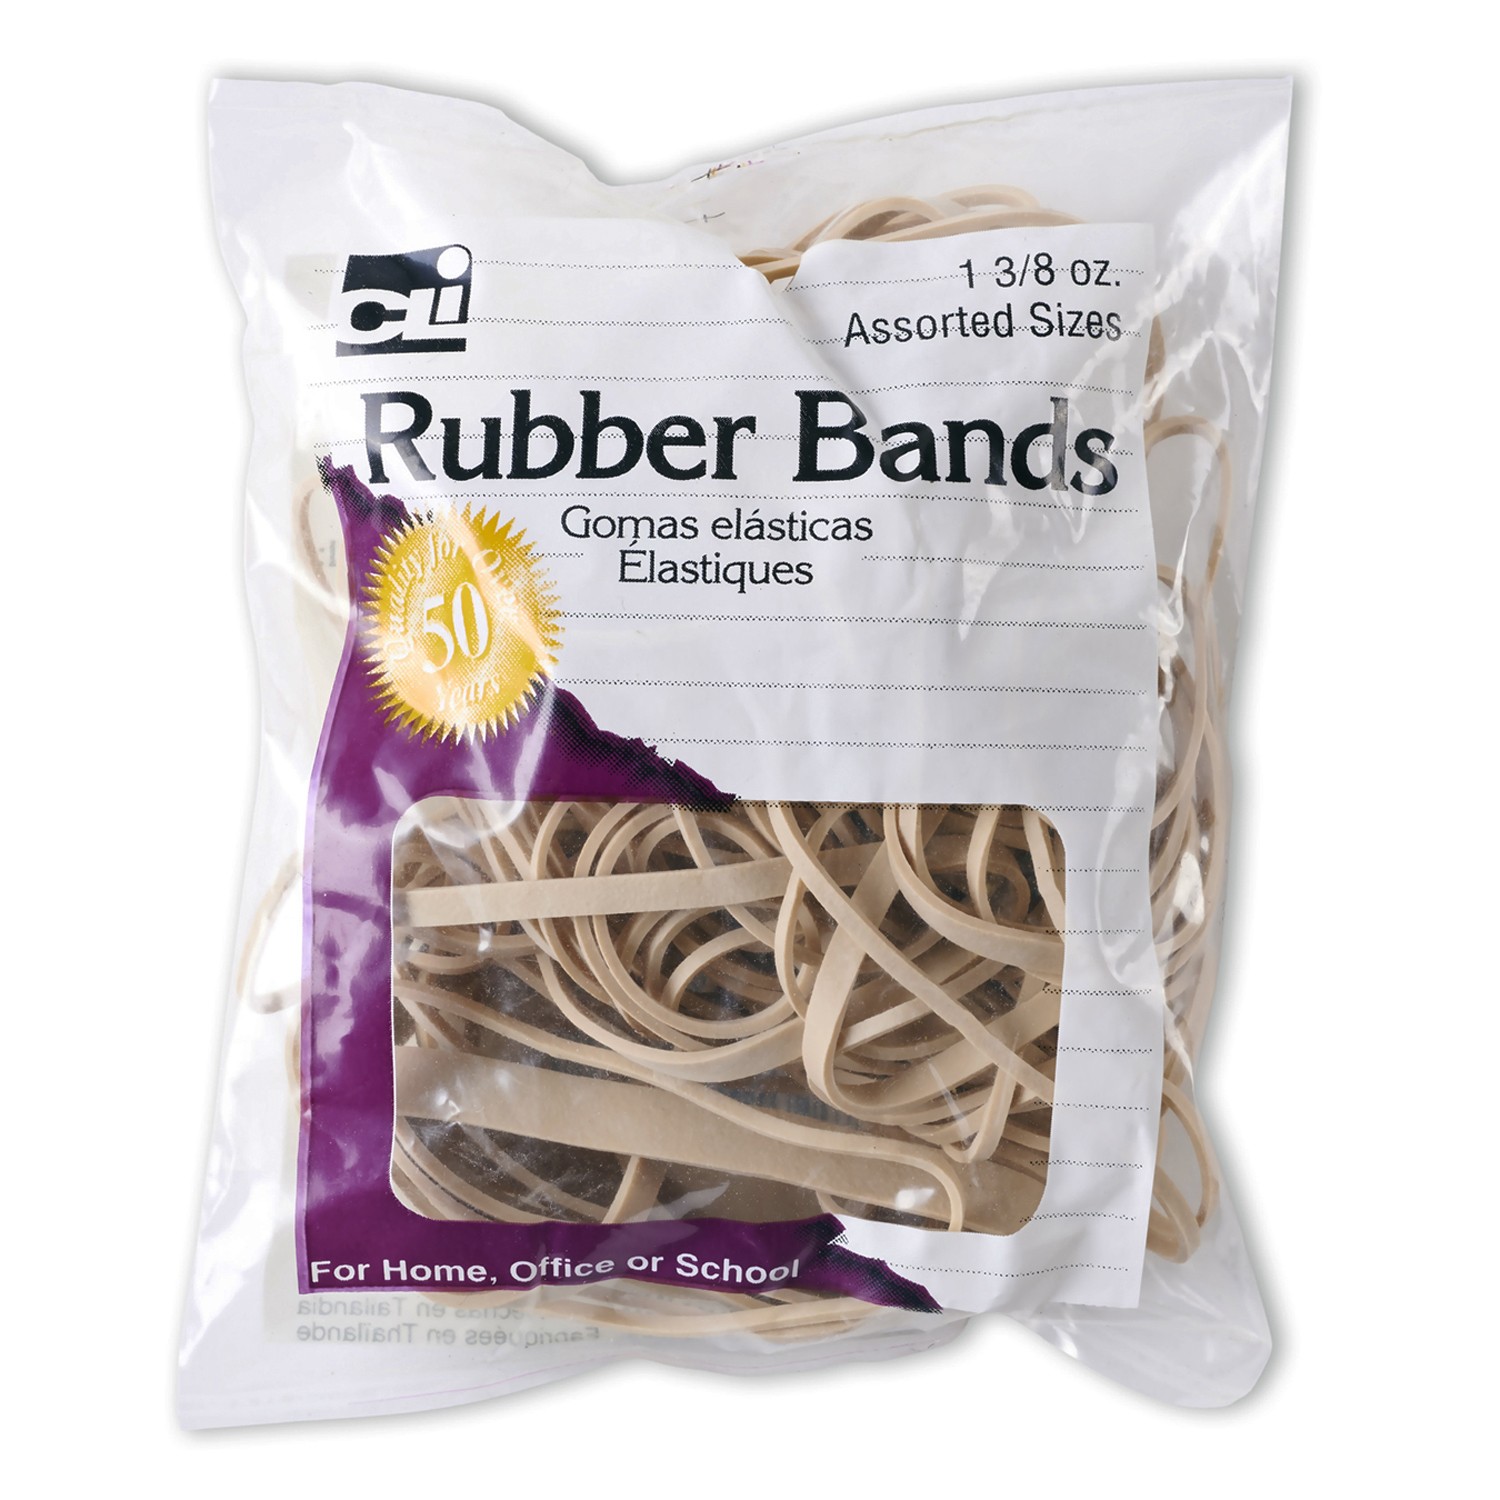 Rubber Bands, Assorted Sizes, Natural Color, 1 3/8 oz. bag